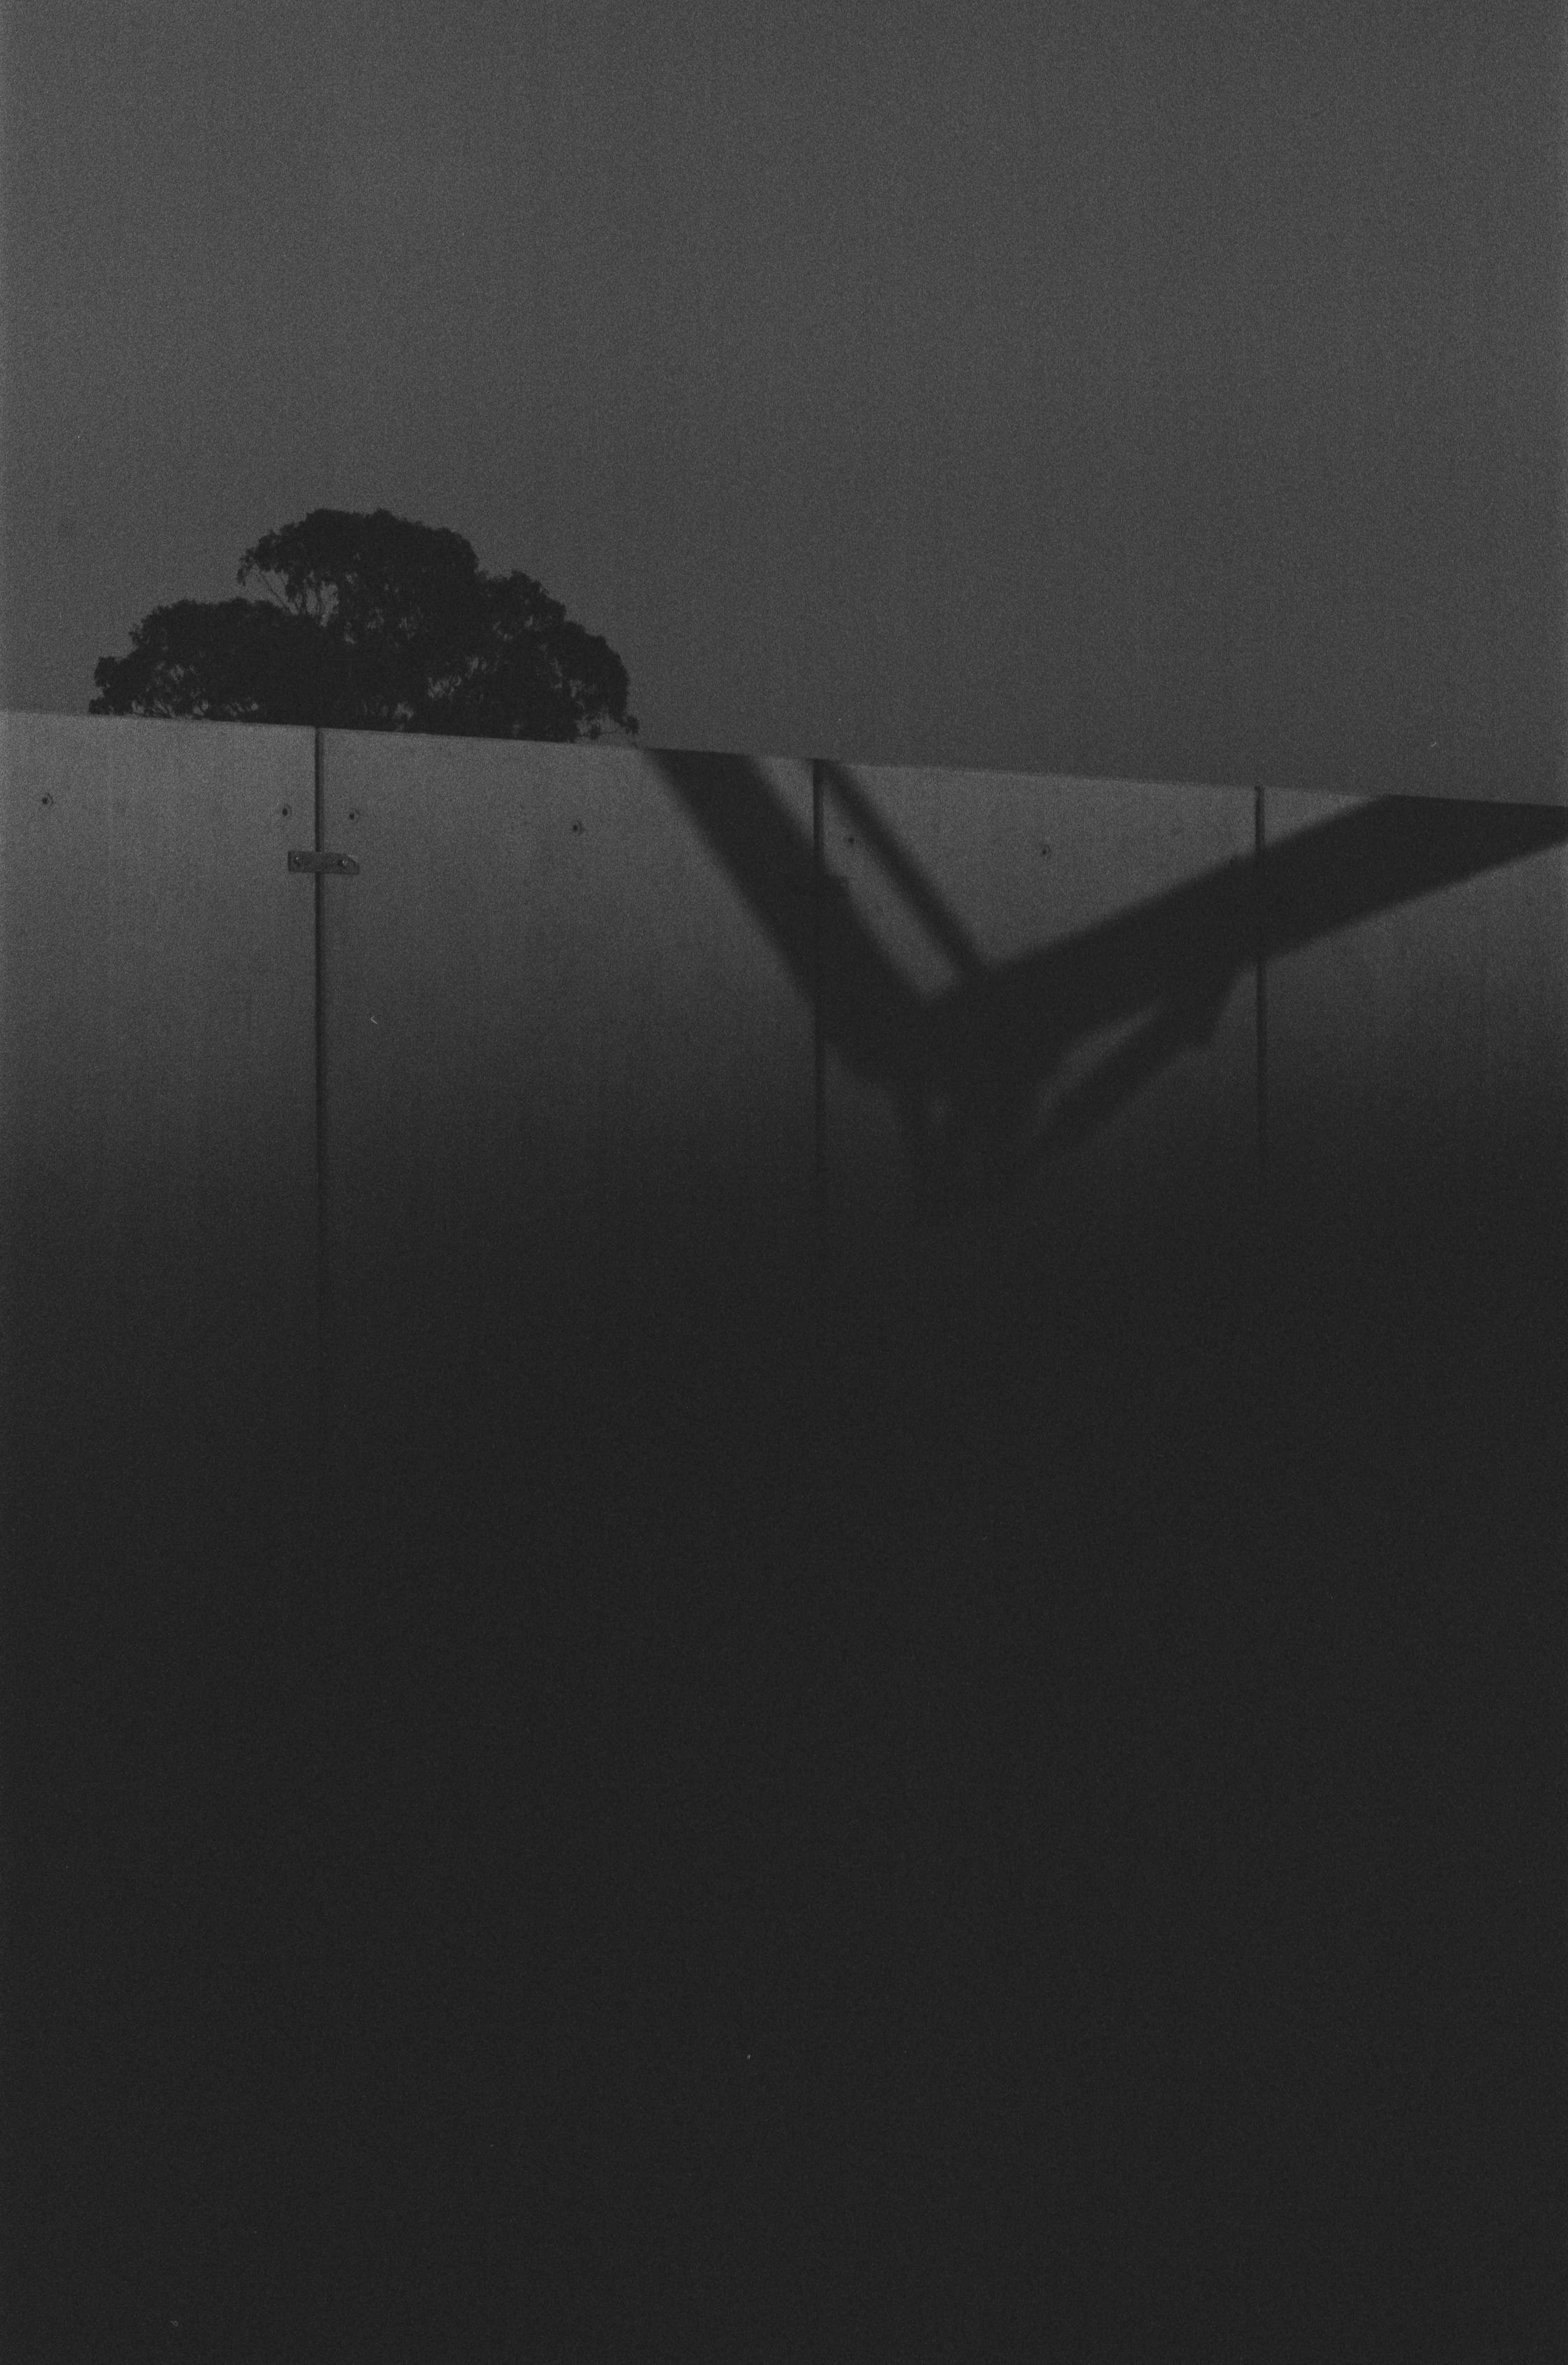 Crane shadow on a concrete wall.